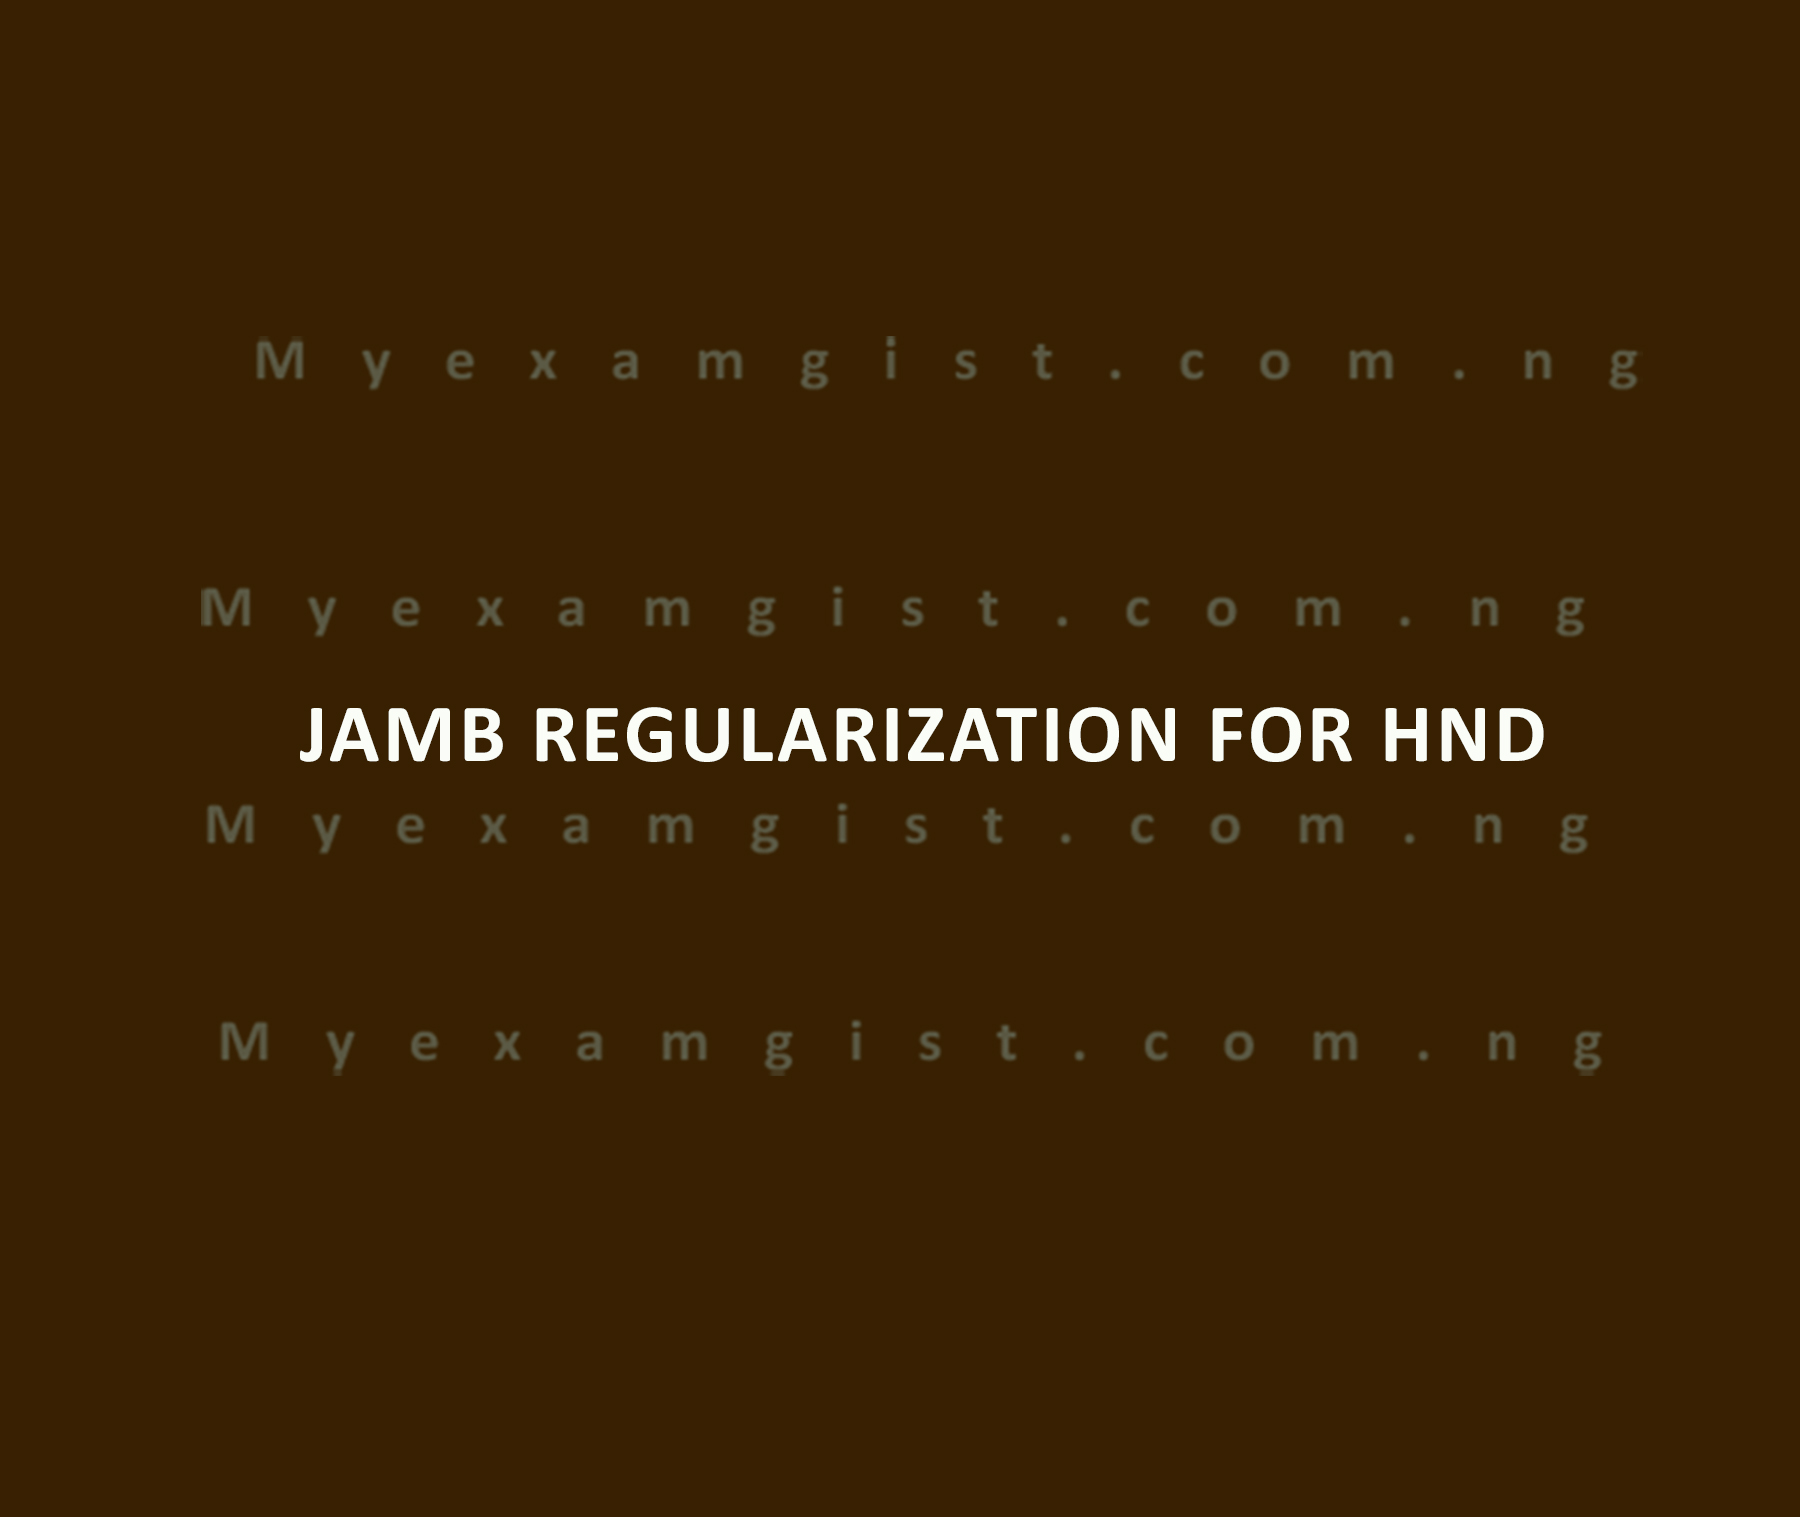 Jamb regularization for HND